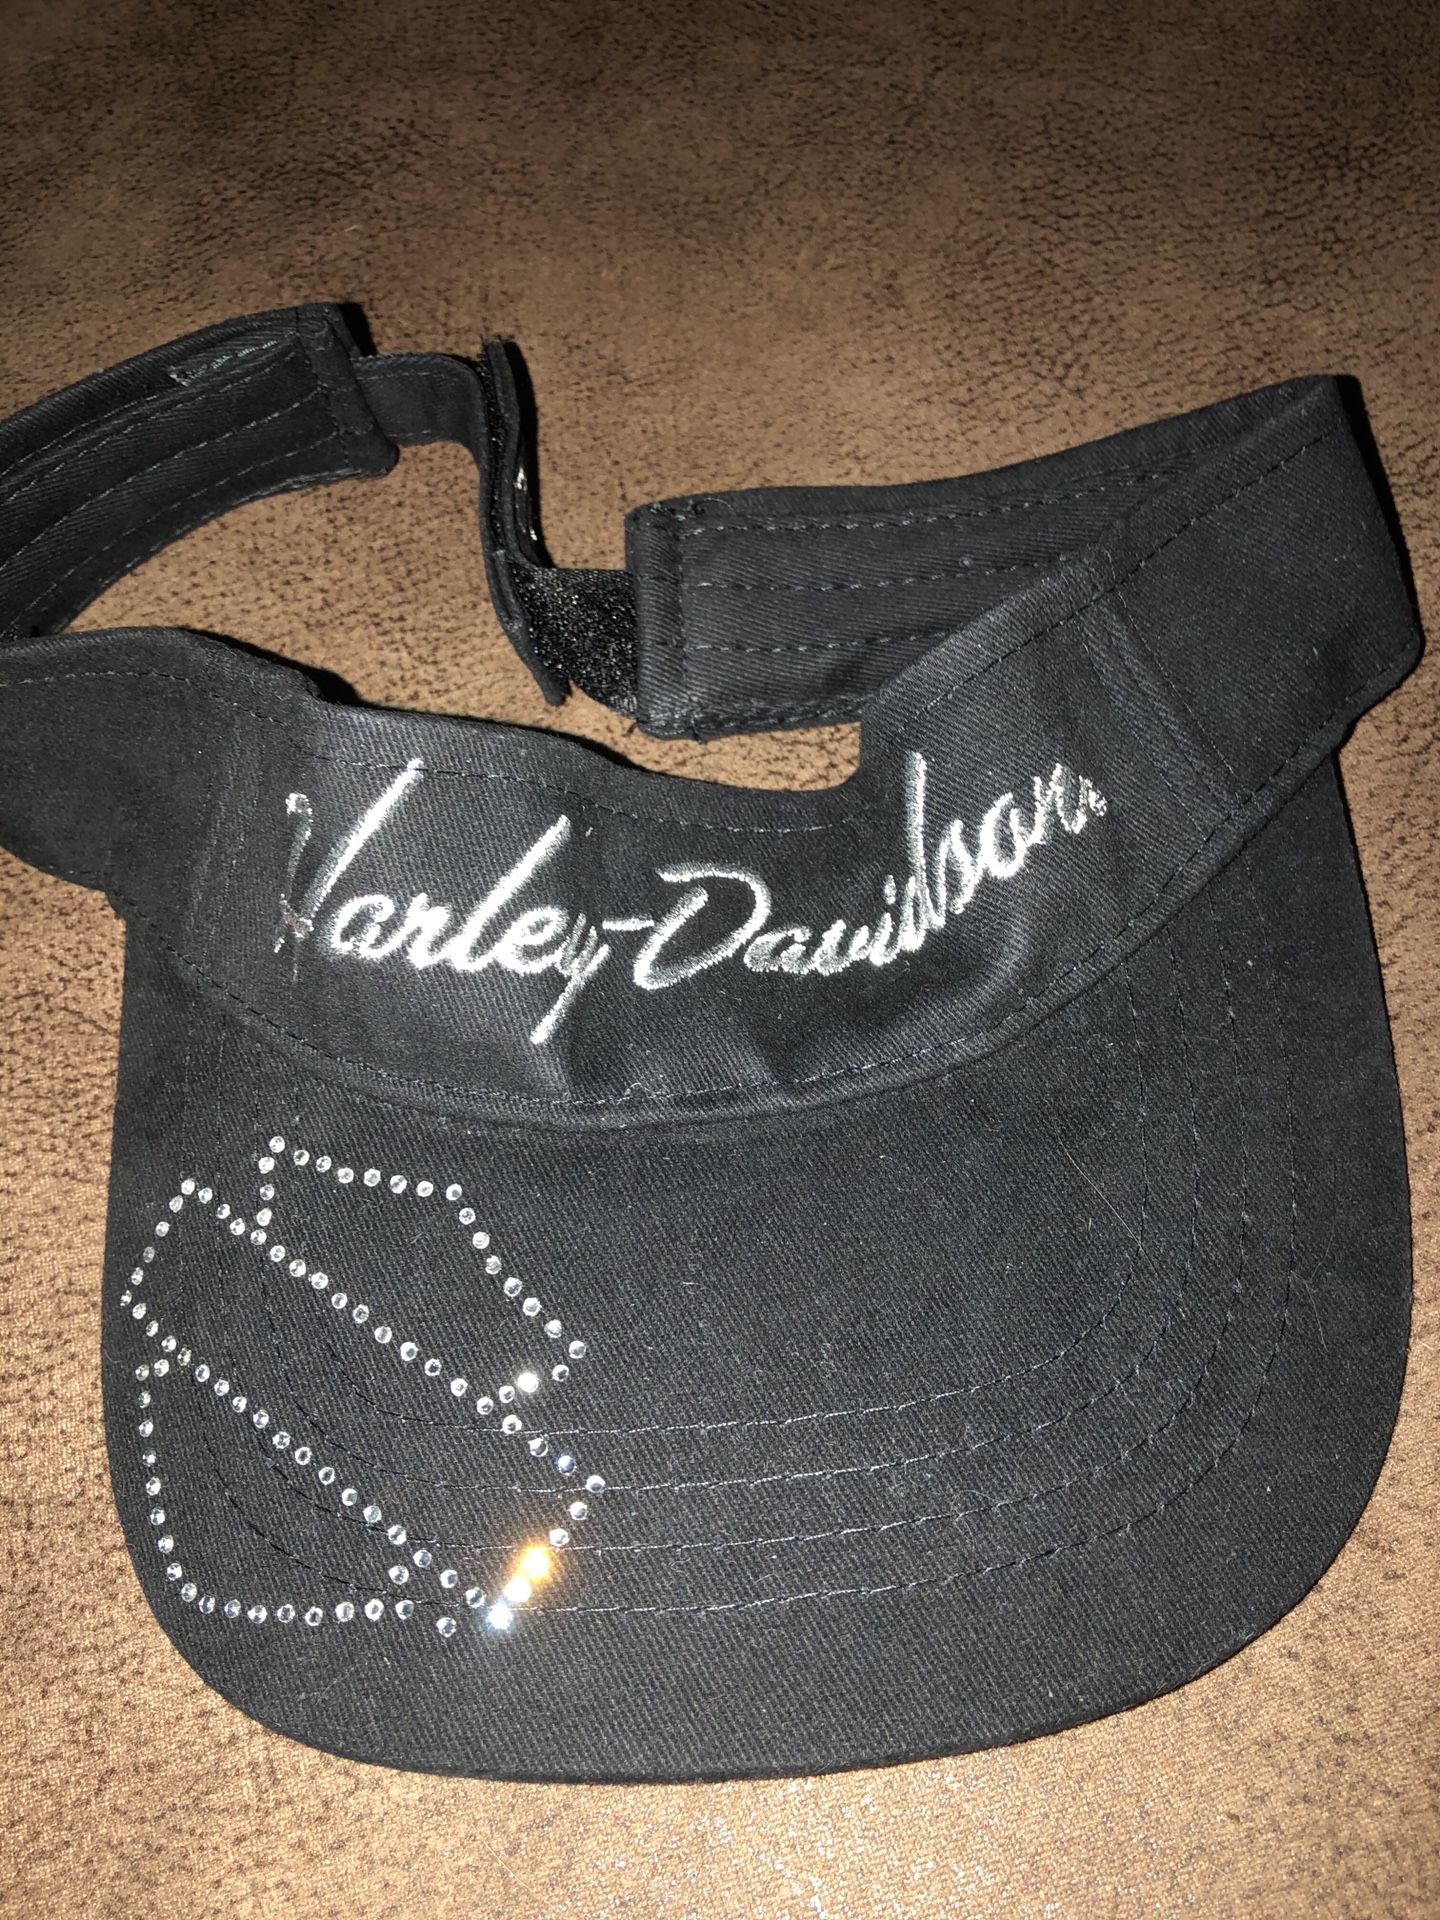 Harley Davidson ladies accessories